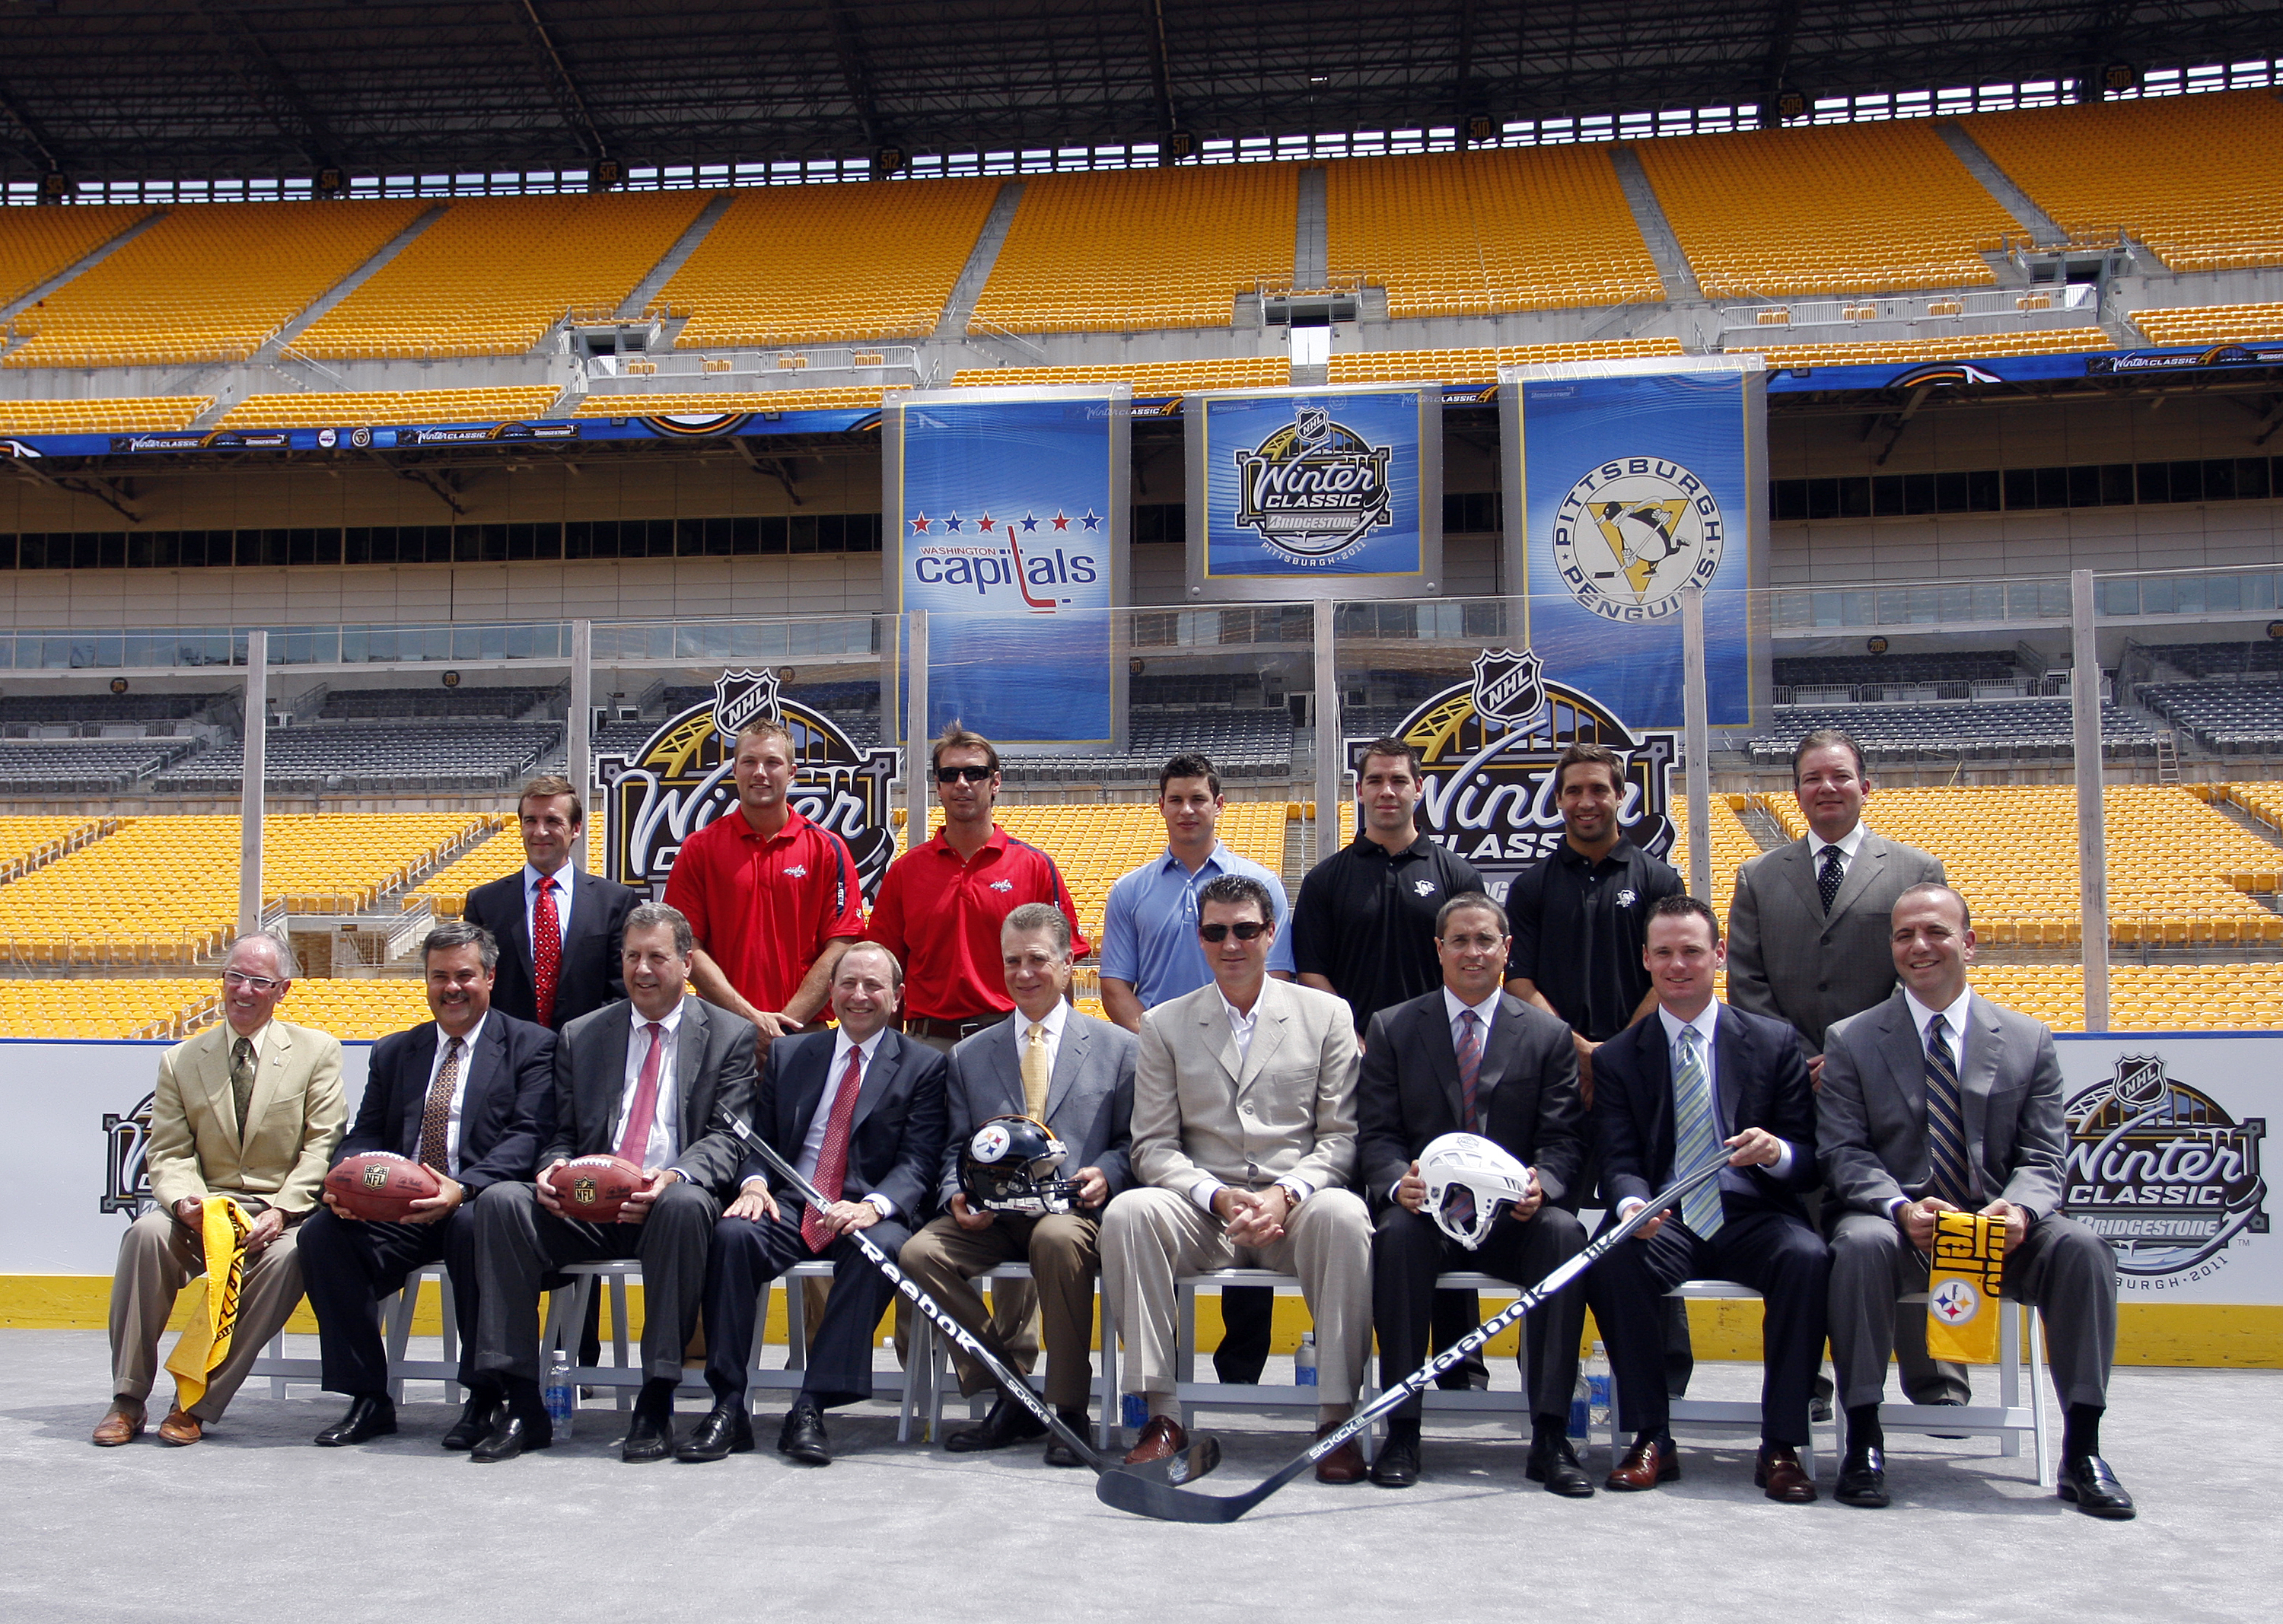 2008 Sidney Crosby Pittsburgh Penguins Winter Classic Reebok NHL